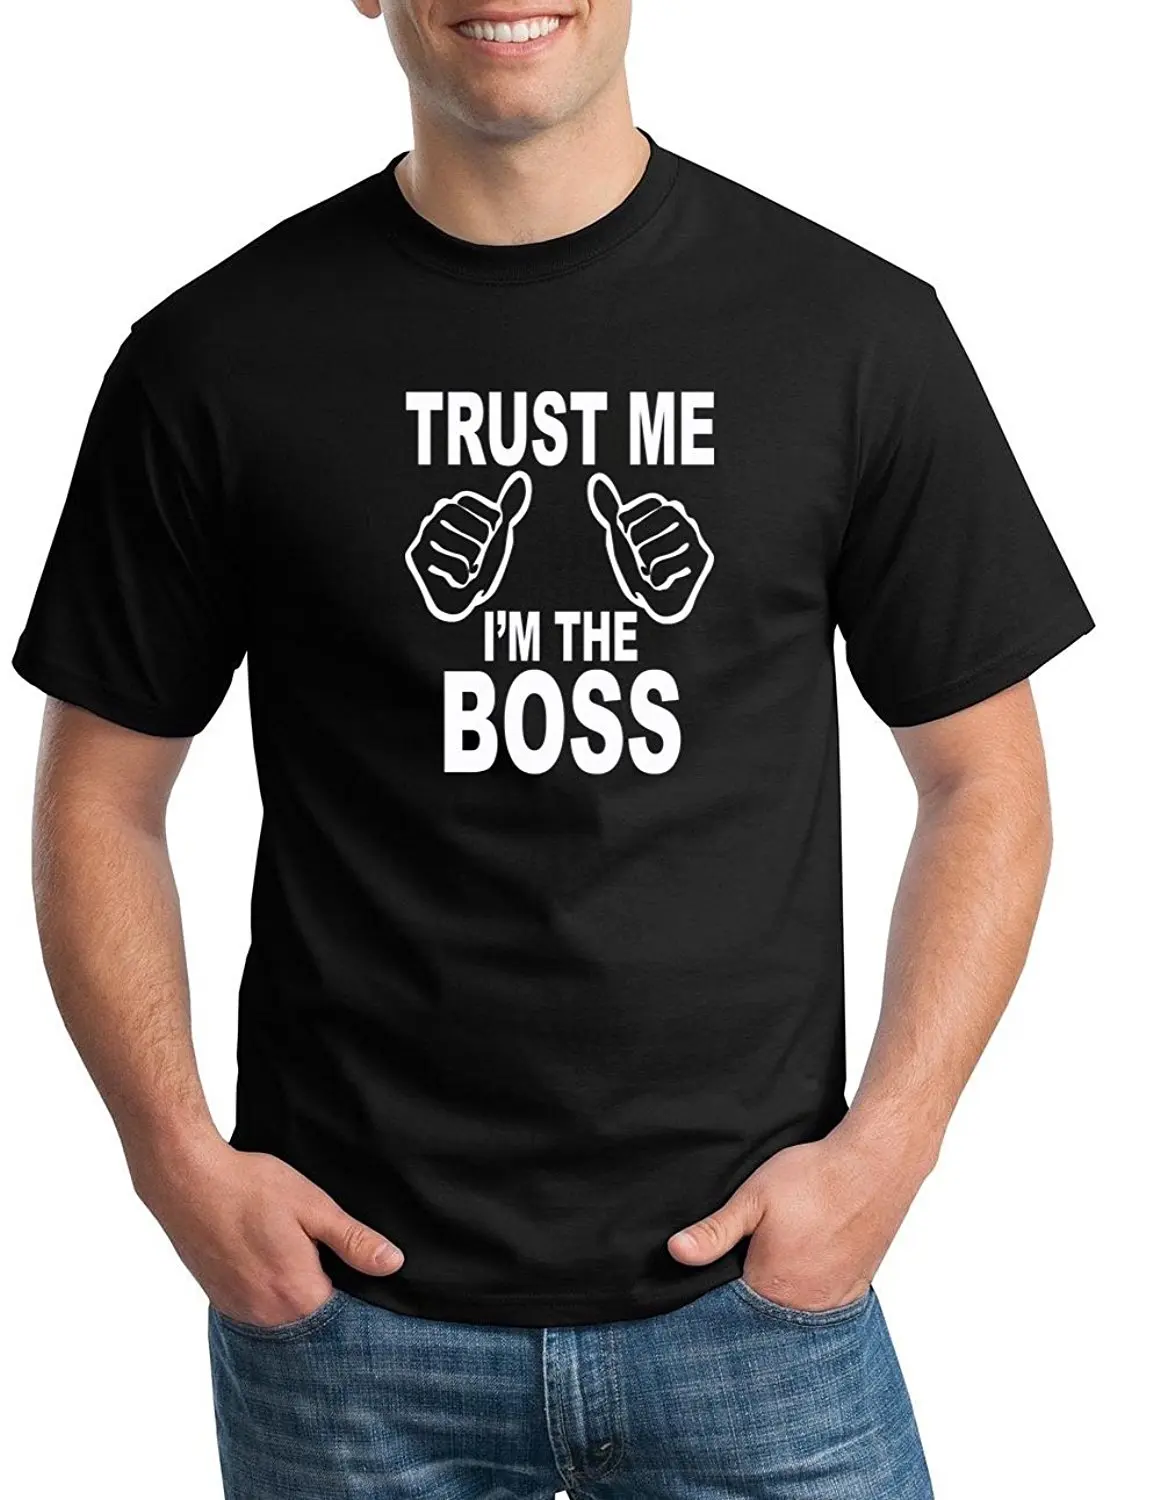 Cherrybargains Funny Men's T-shirt Trust Me, I'm The Boss 100% Cotton Black Brand Cotton Men Clothing Male Slim Fit Shirt - T-shirts - AliExpress